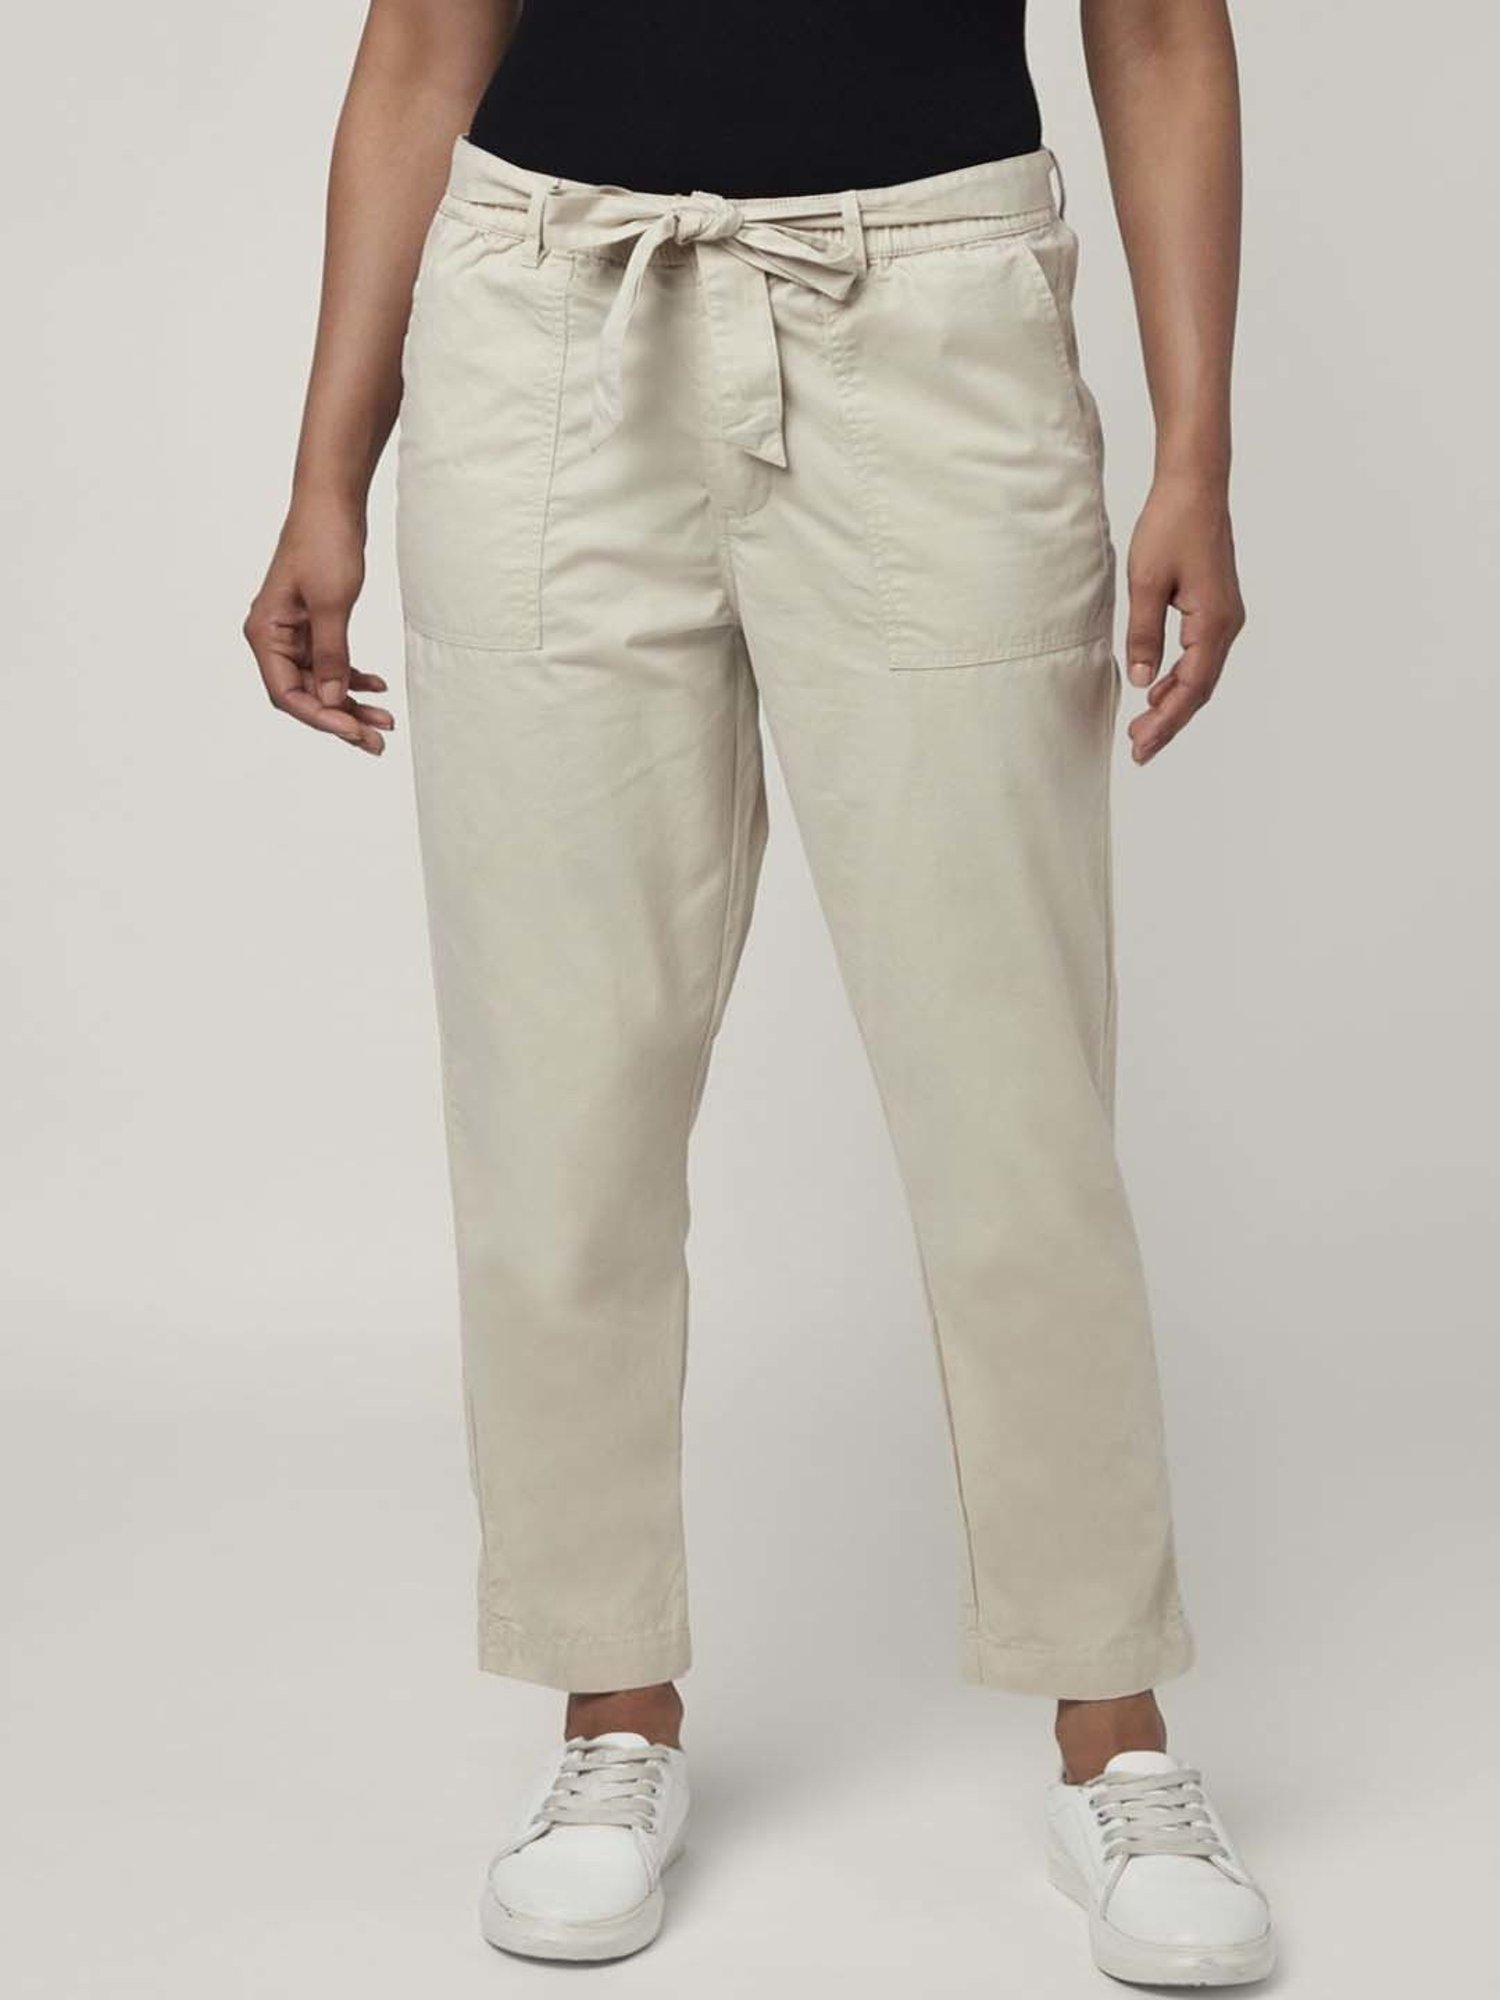 Buy BEIGE Trousers  Pants for Women by Honey by Pantaloons Online   Ajiocom